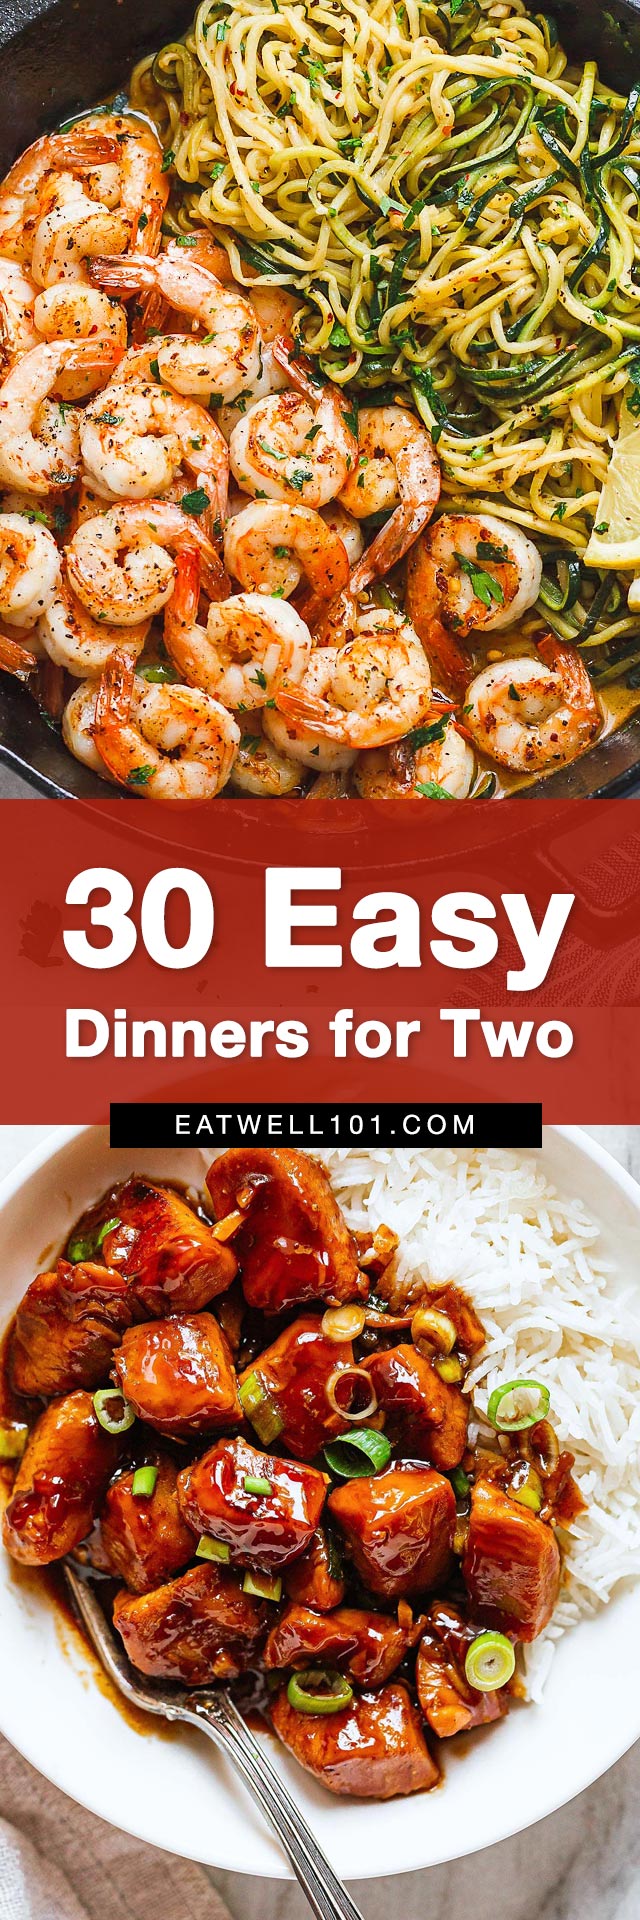 80 Easy Dinner Recipes for Two - Best Dinner Ideas for Two